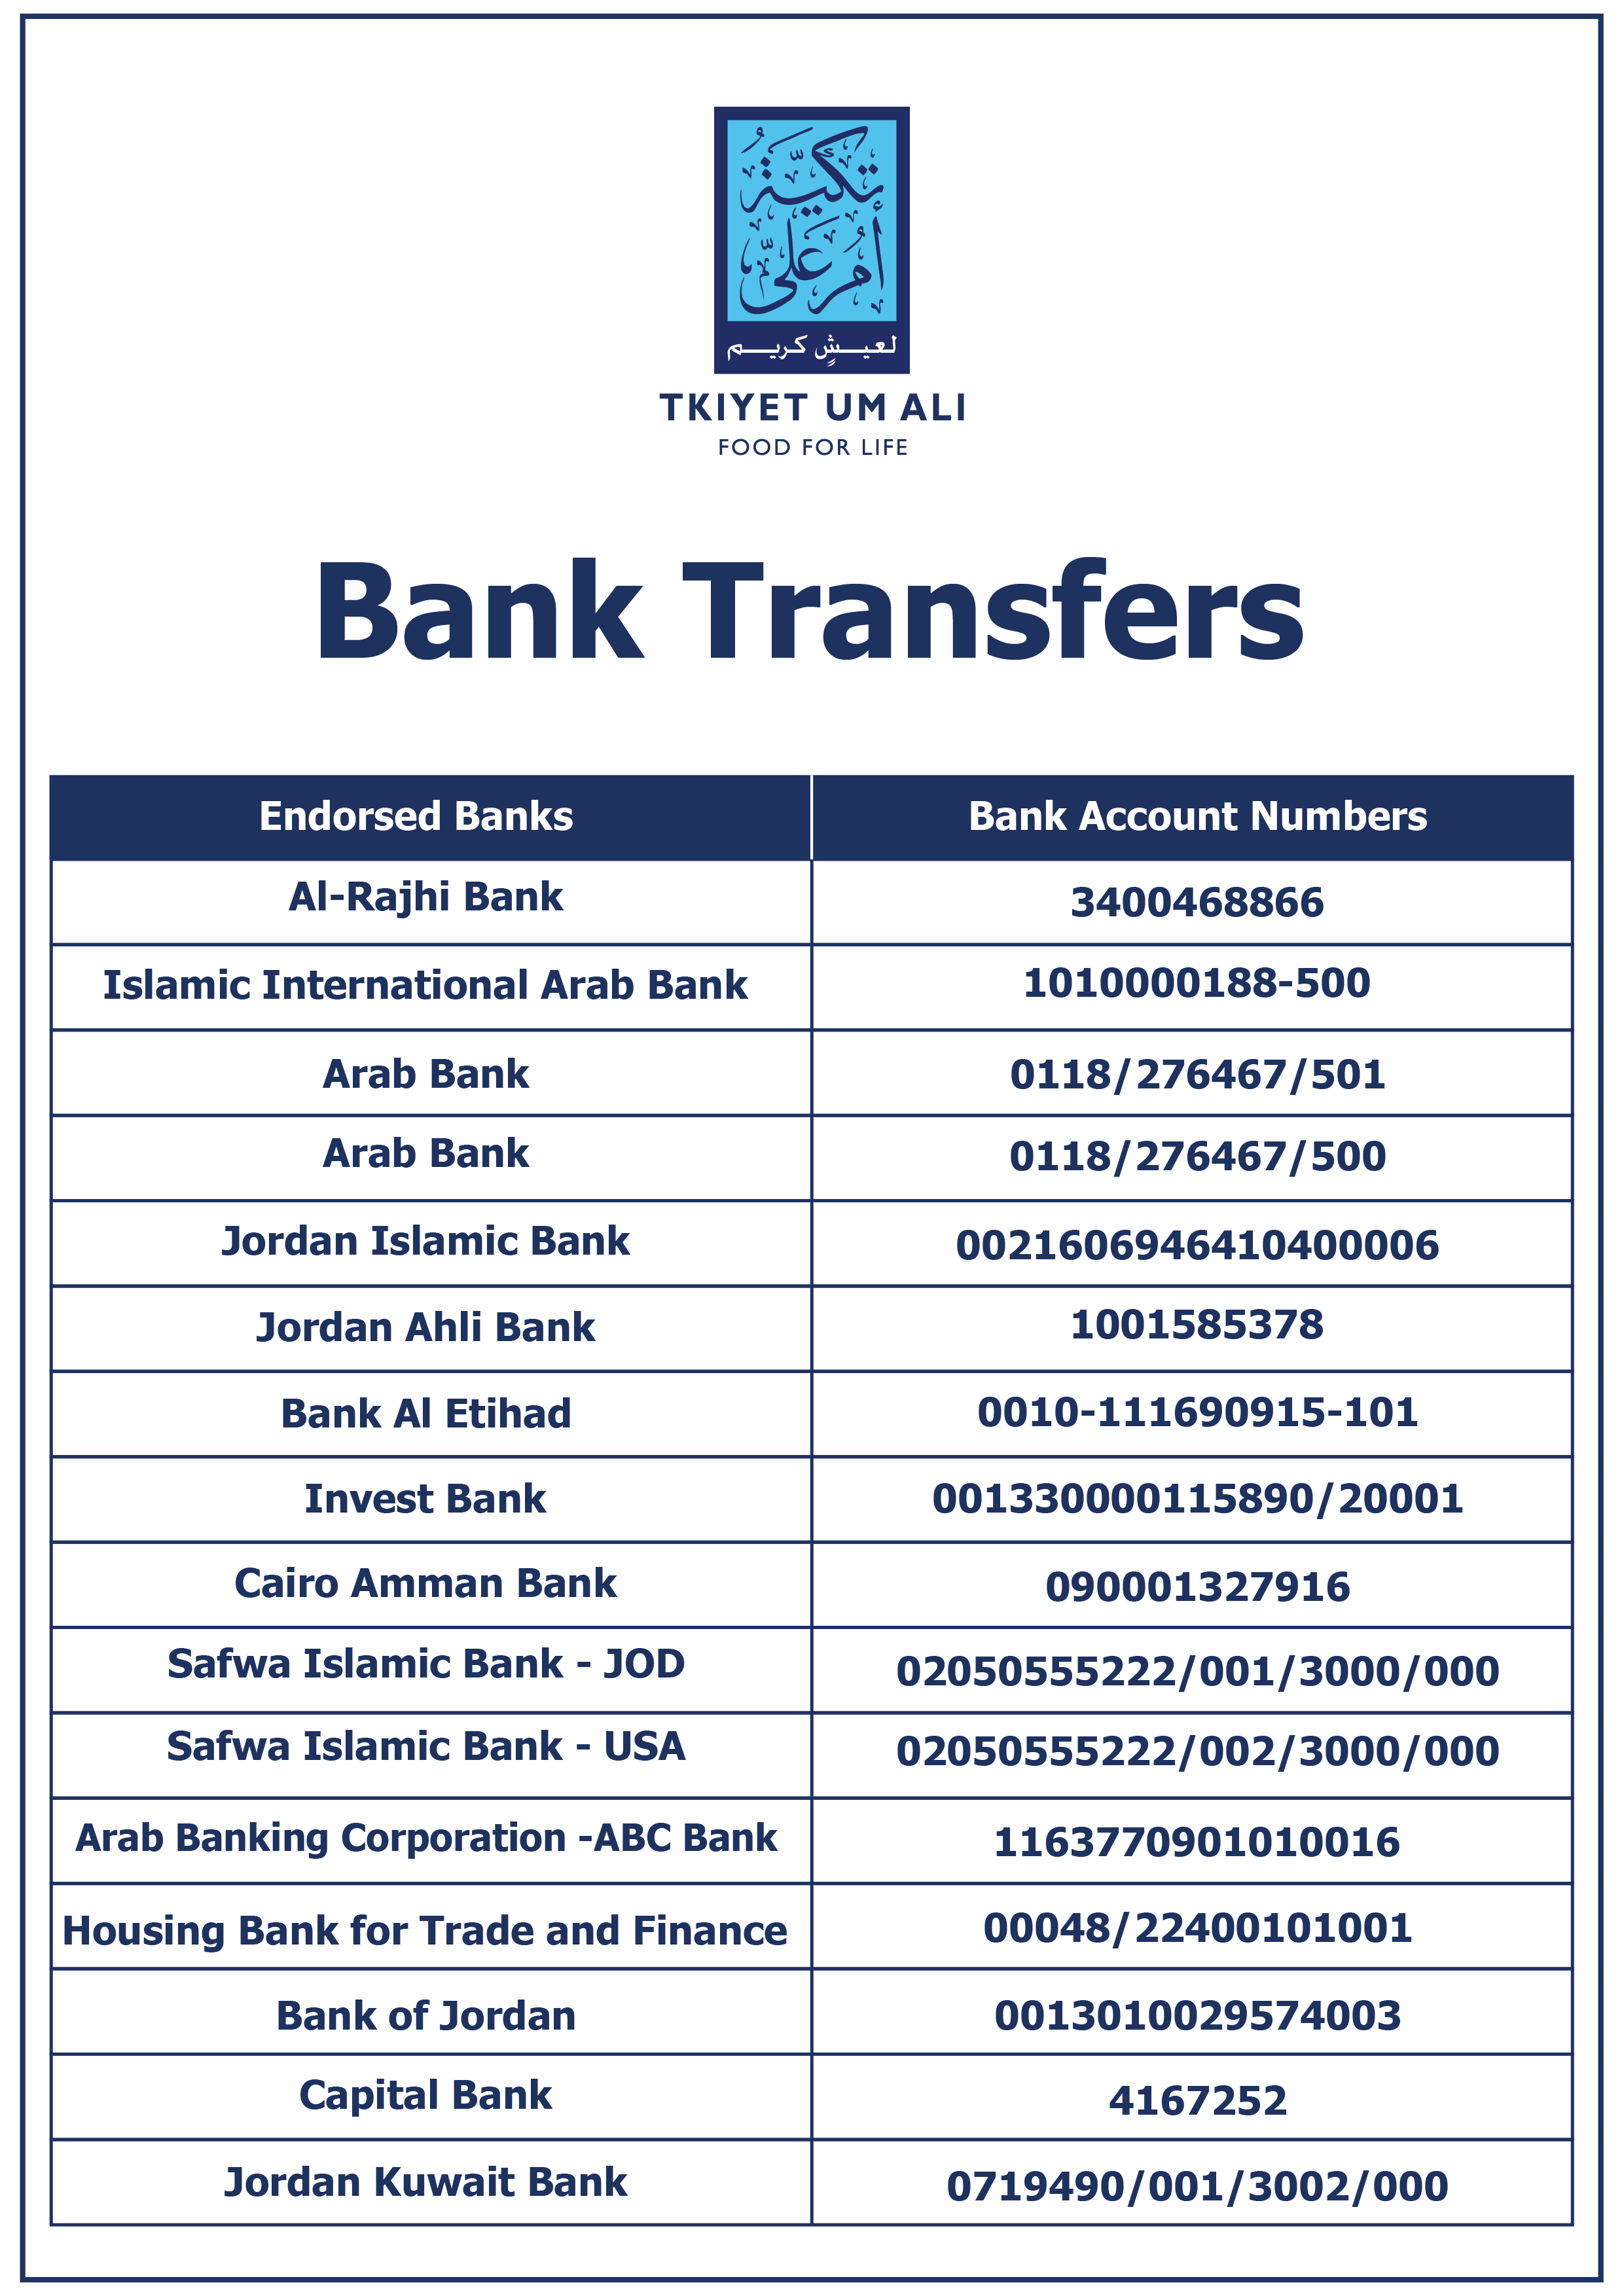 Bank Transfer 